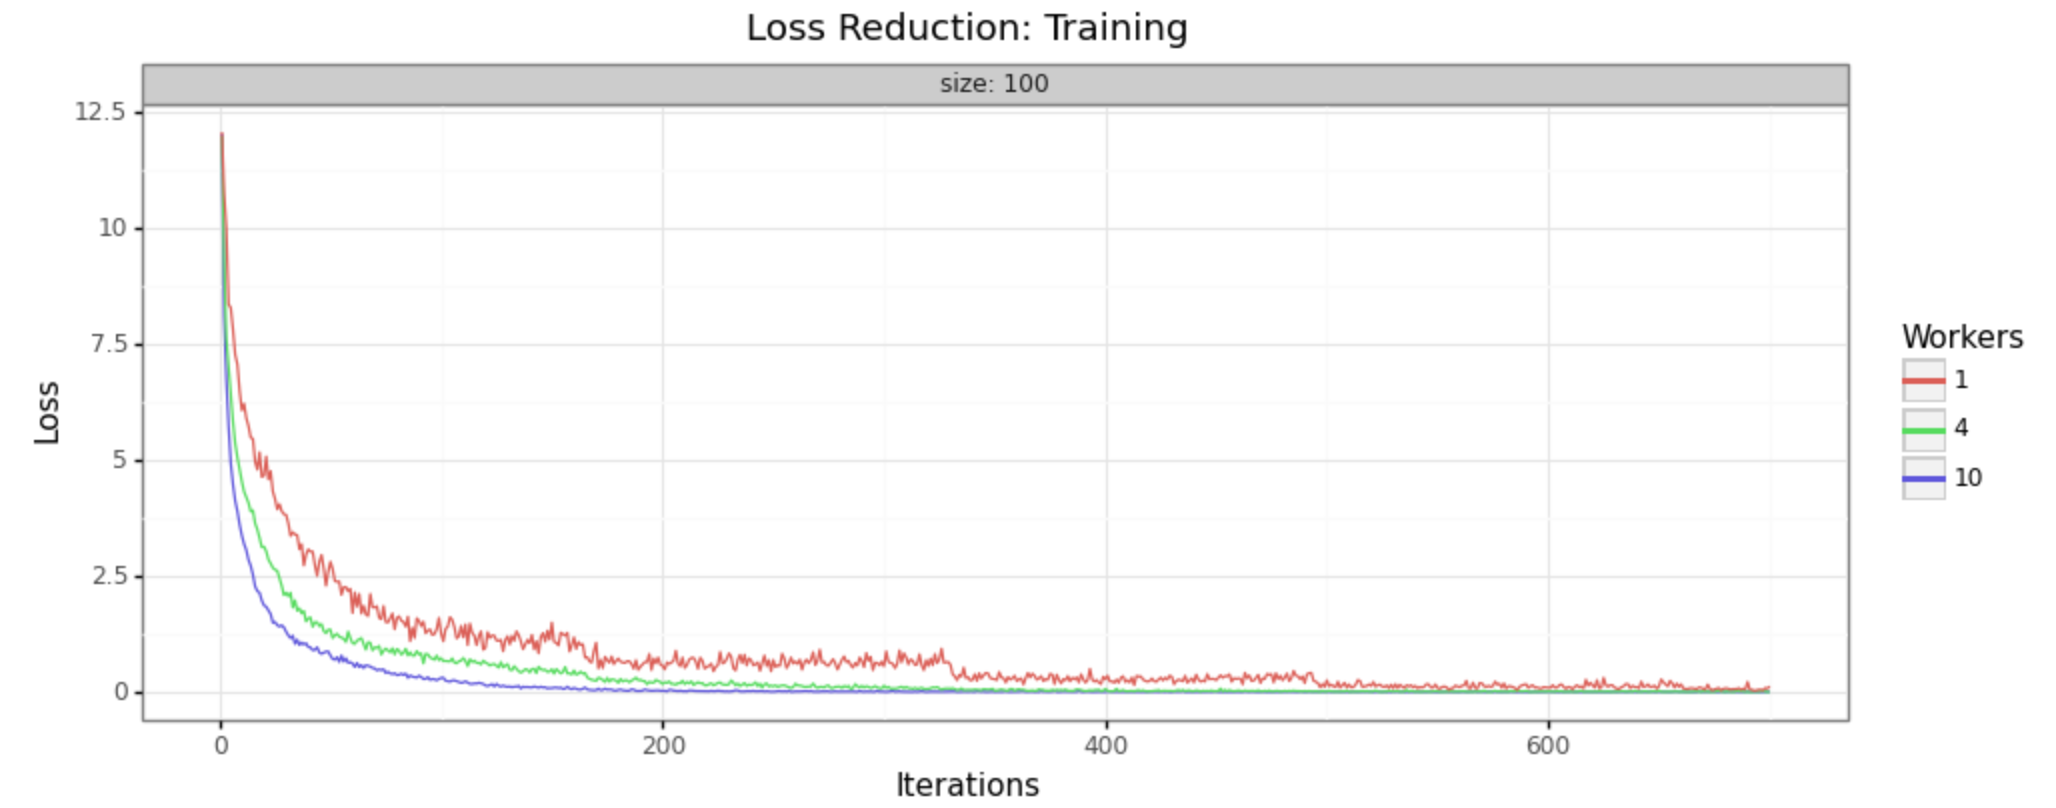 Loss reduction: Training